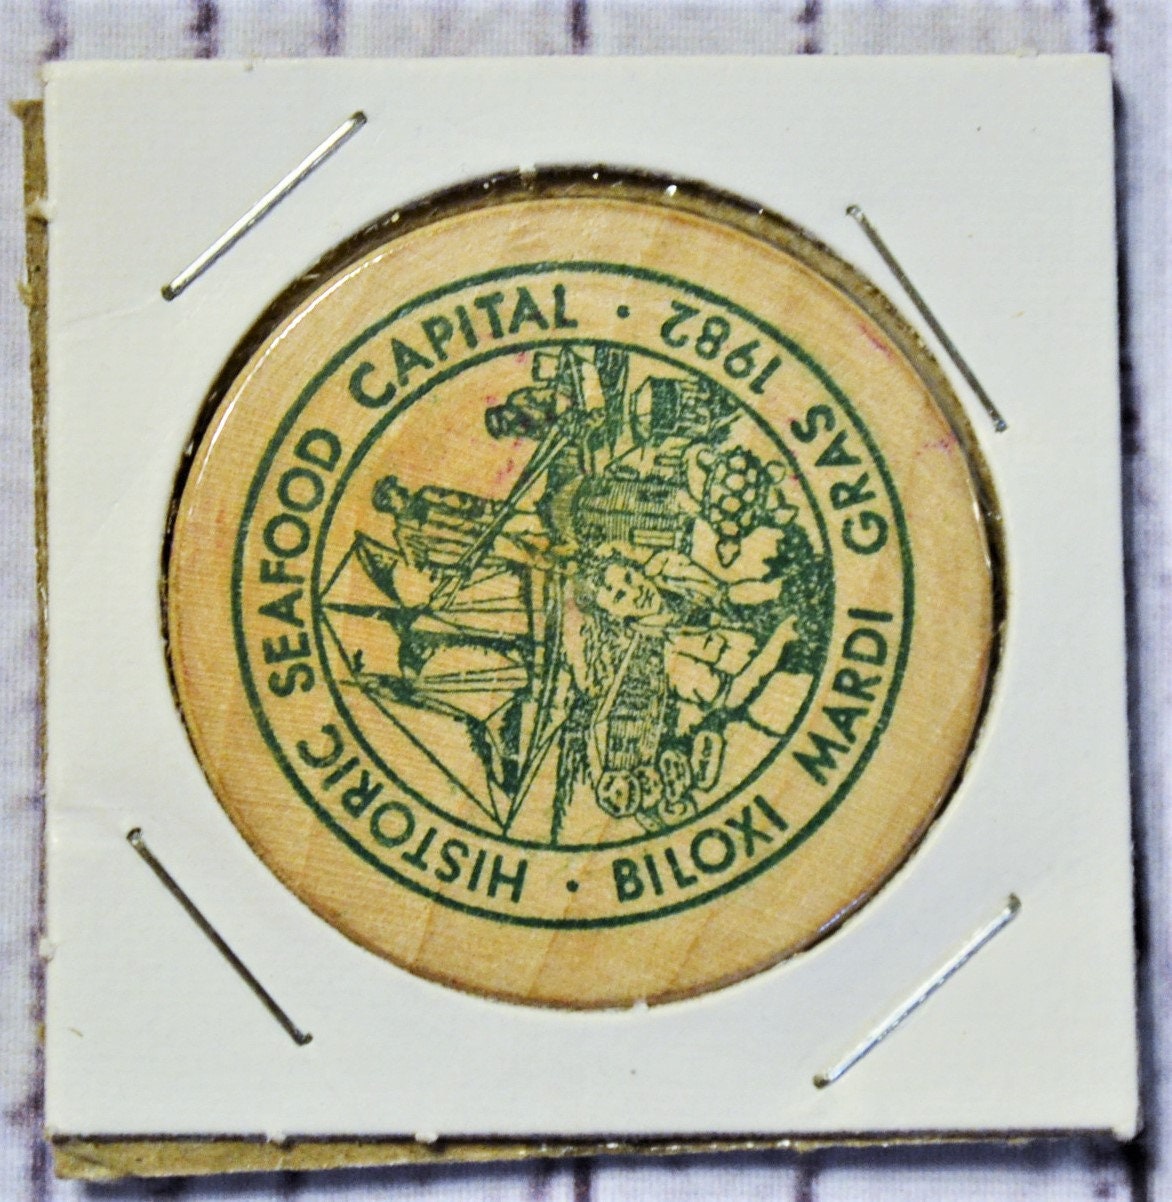 Vintage Wooden Nickel Biloxi Marching Club Seafood Mississippi Souvenir Wood Token Coin Advertising Memorabilia Panchosporch